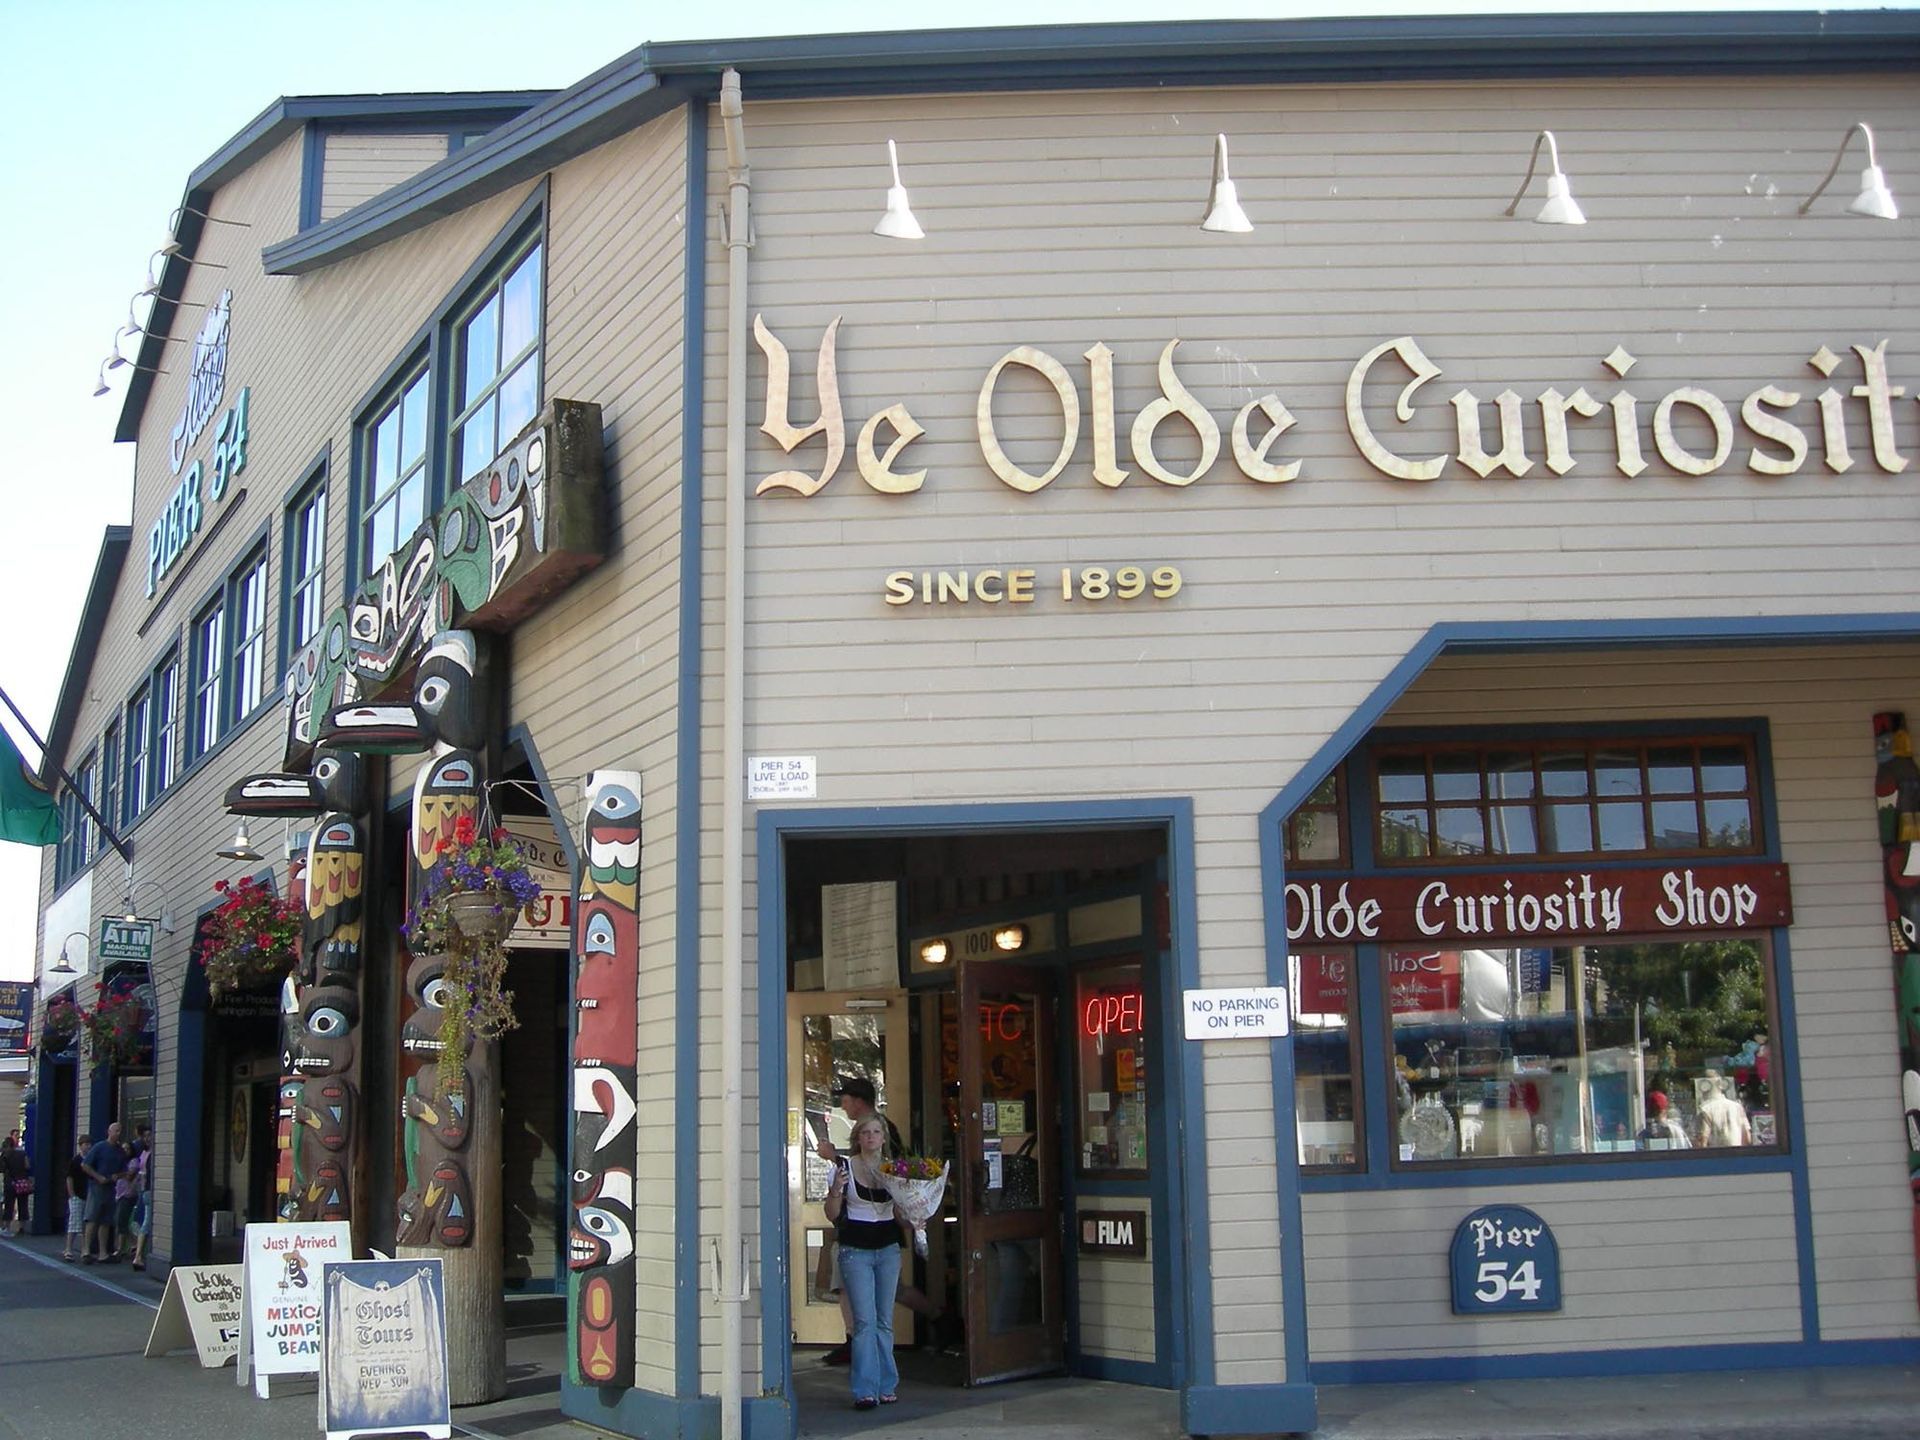 Ye Olde Curiosity Shop, אחת משתי החנויות בסיאטל שהציעו ללא ידיעתן חפצי אמנות של אמנים שהתחזו לאינדיאנים, לואיס אנתוני ראת' וג'רי כריס ואן דייק

תמונה מאת ג'ו מייבל/ויקימדיה


